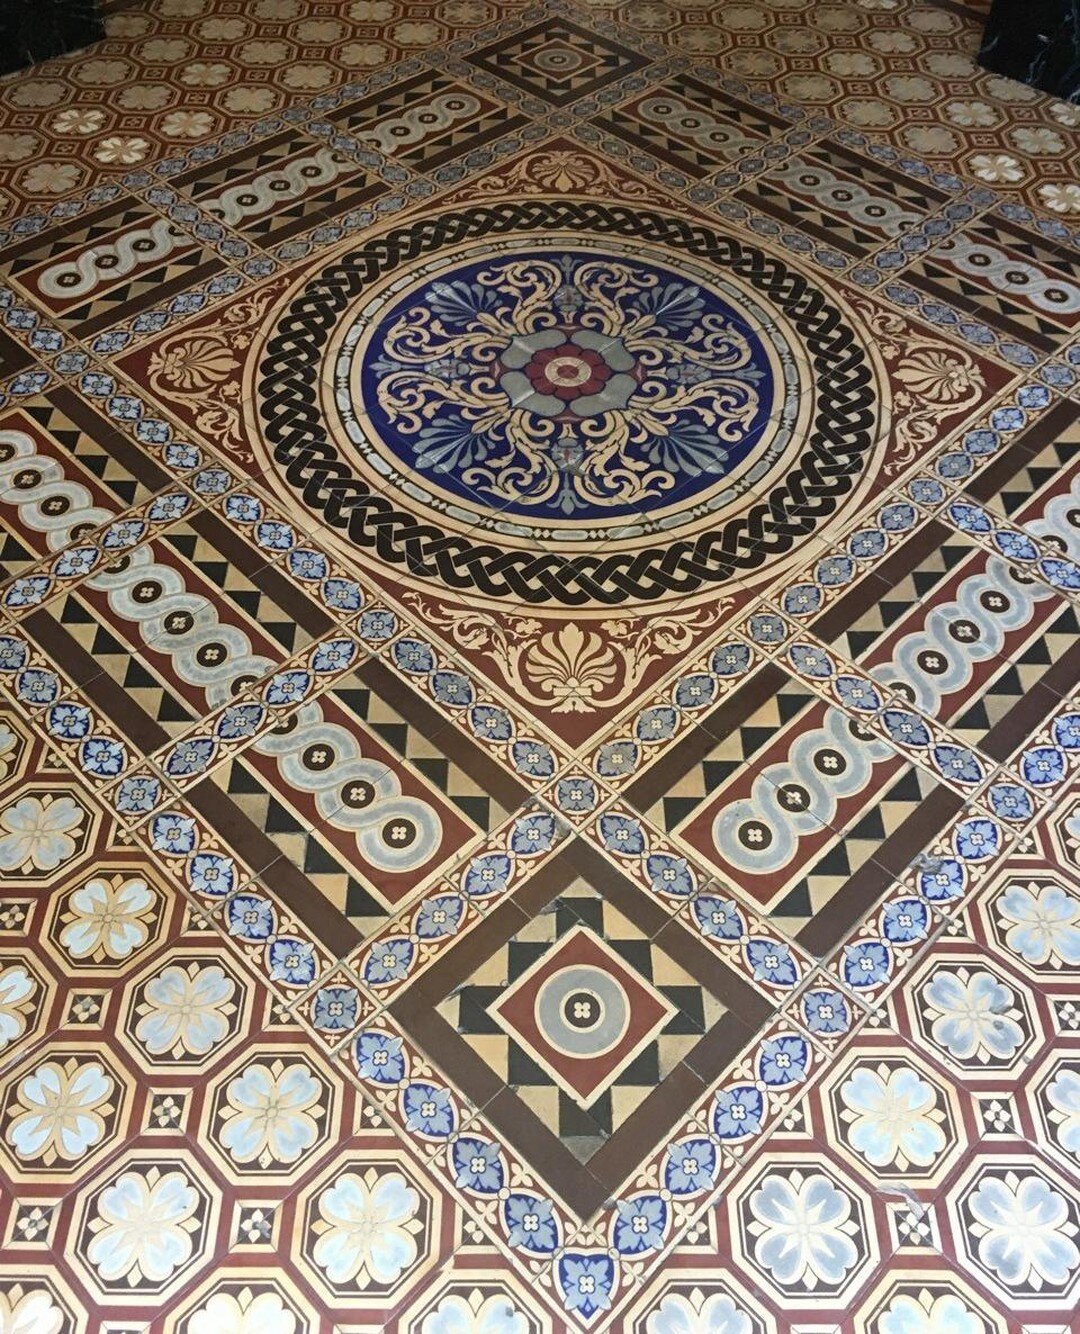 A snapshot of some beautiful tiles as seen on the floor of a Charleston mansion. #geometric patterns #colorcombination #charleston #inspiration #craftmanship #oldyetmodern #chic⠀﻿
.⠀﻿
#amathea #sophieharrison #interior #interiordesign #interiordecora